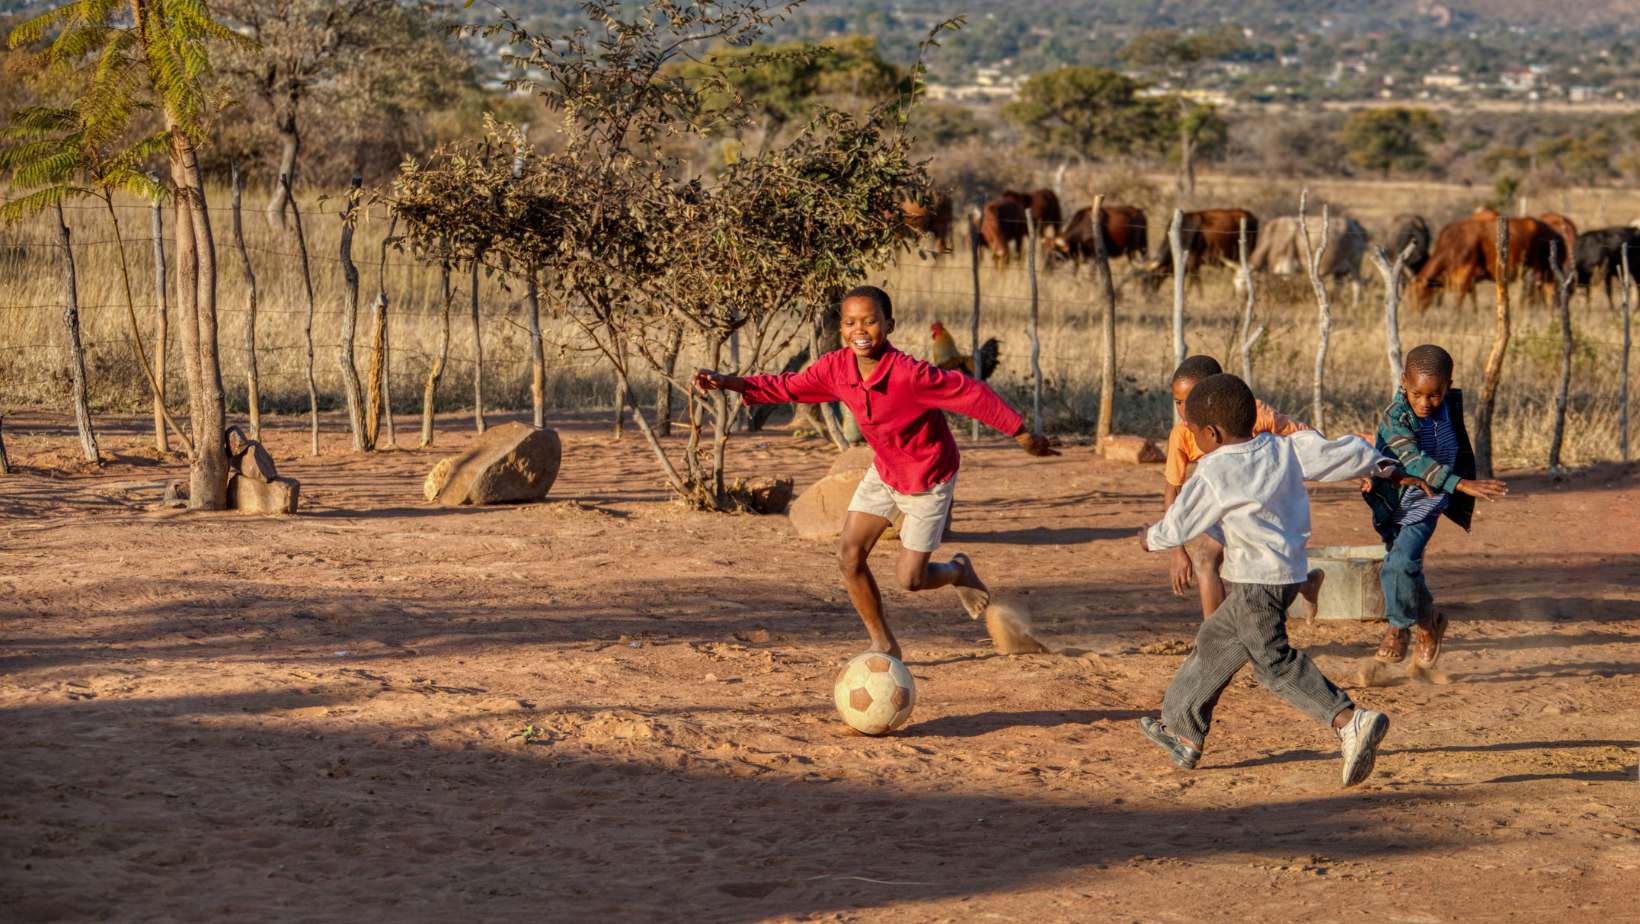 South Africa disadvantaged children play soccer